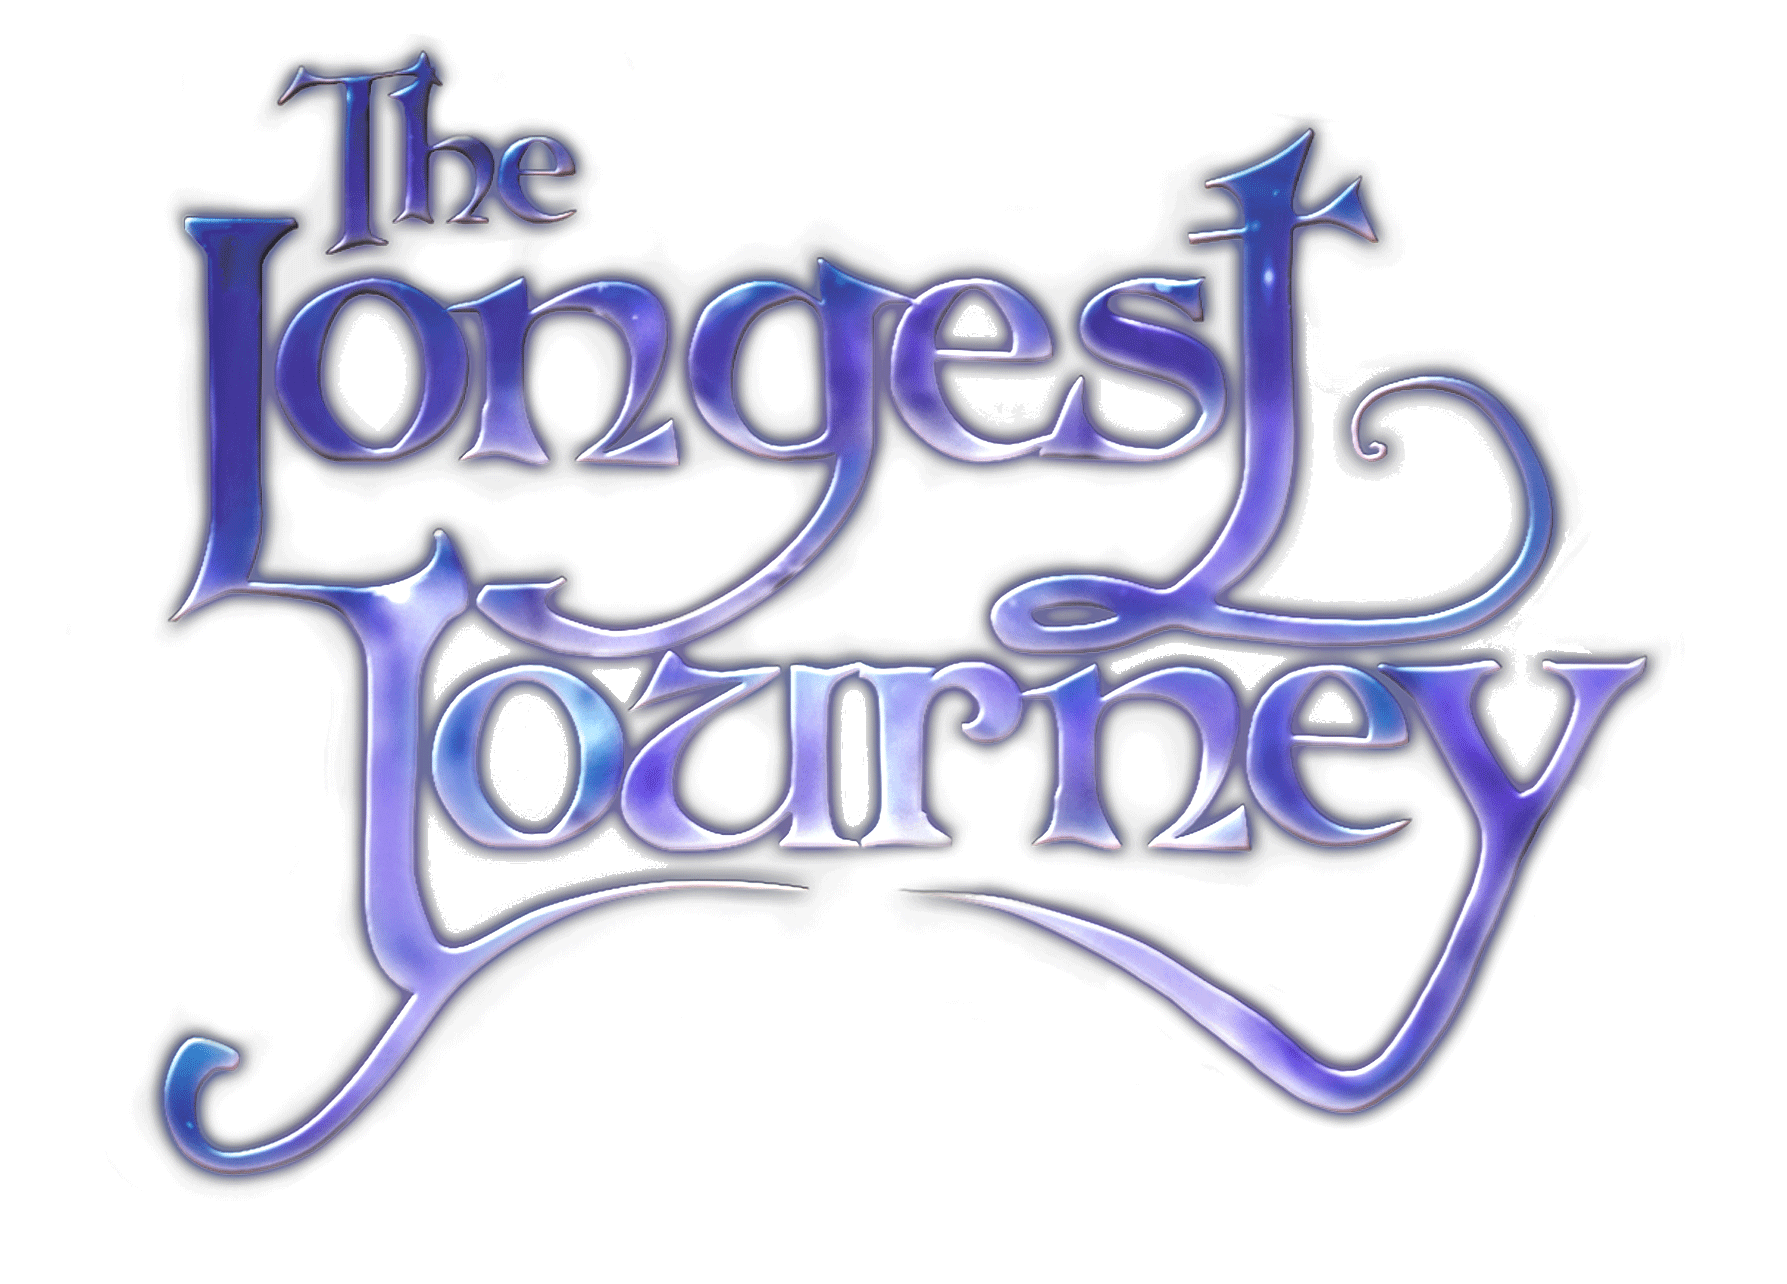 the longest journey tv tropes